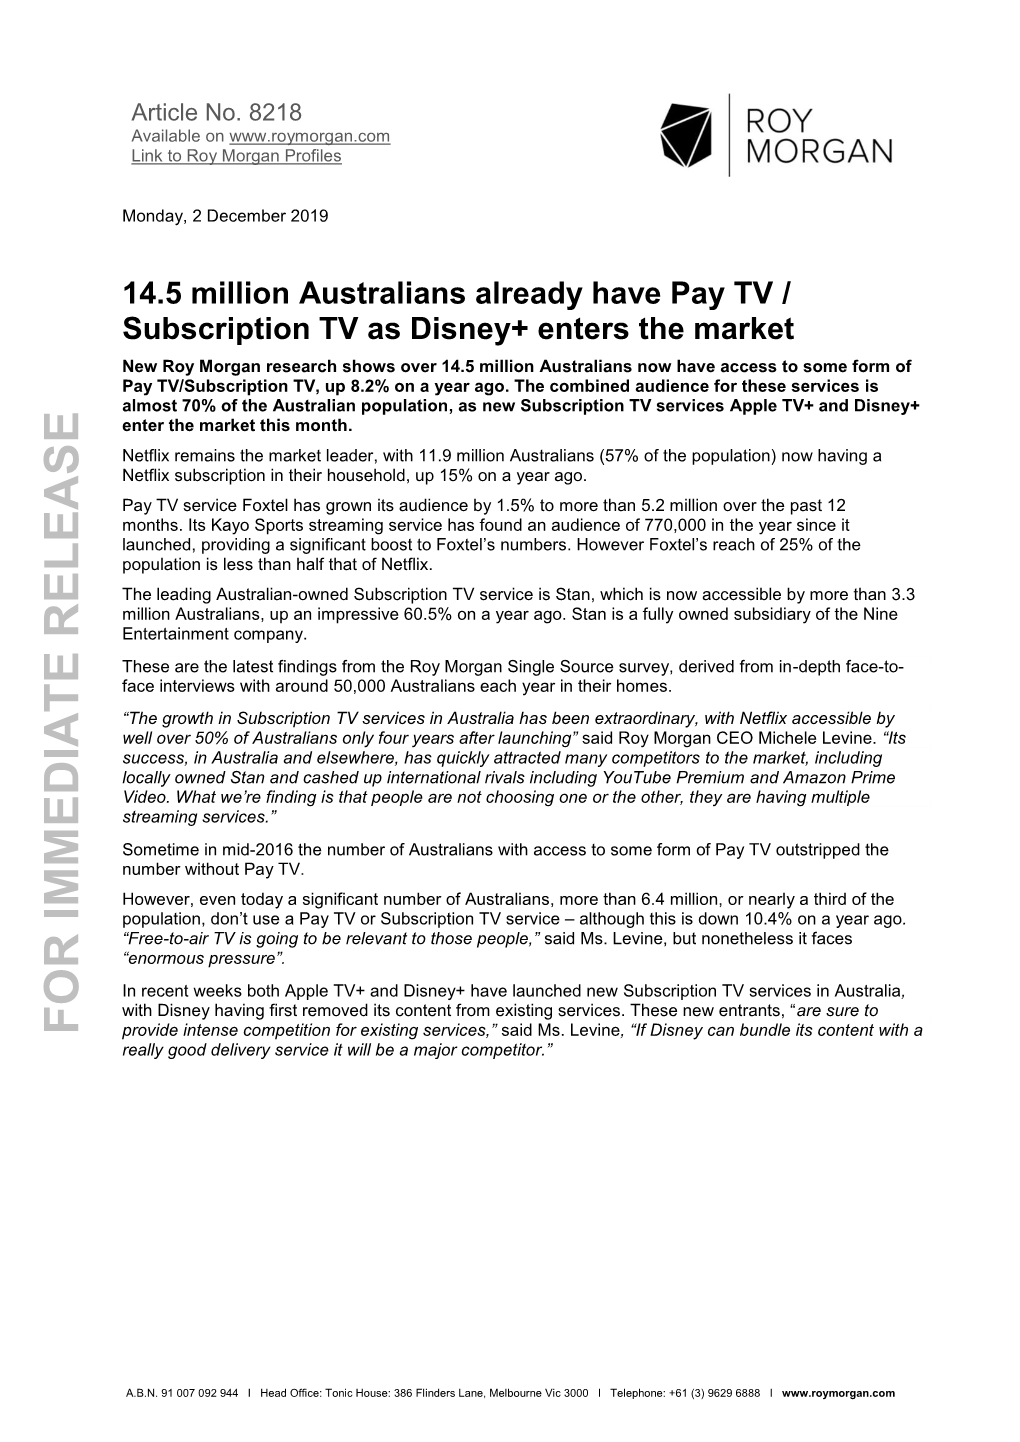 14.5 Million Australians Already Have Pay TV / Subscription TV As Disney+ Enters the Market